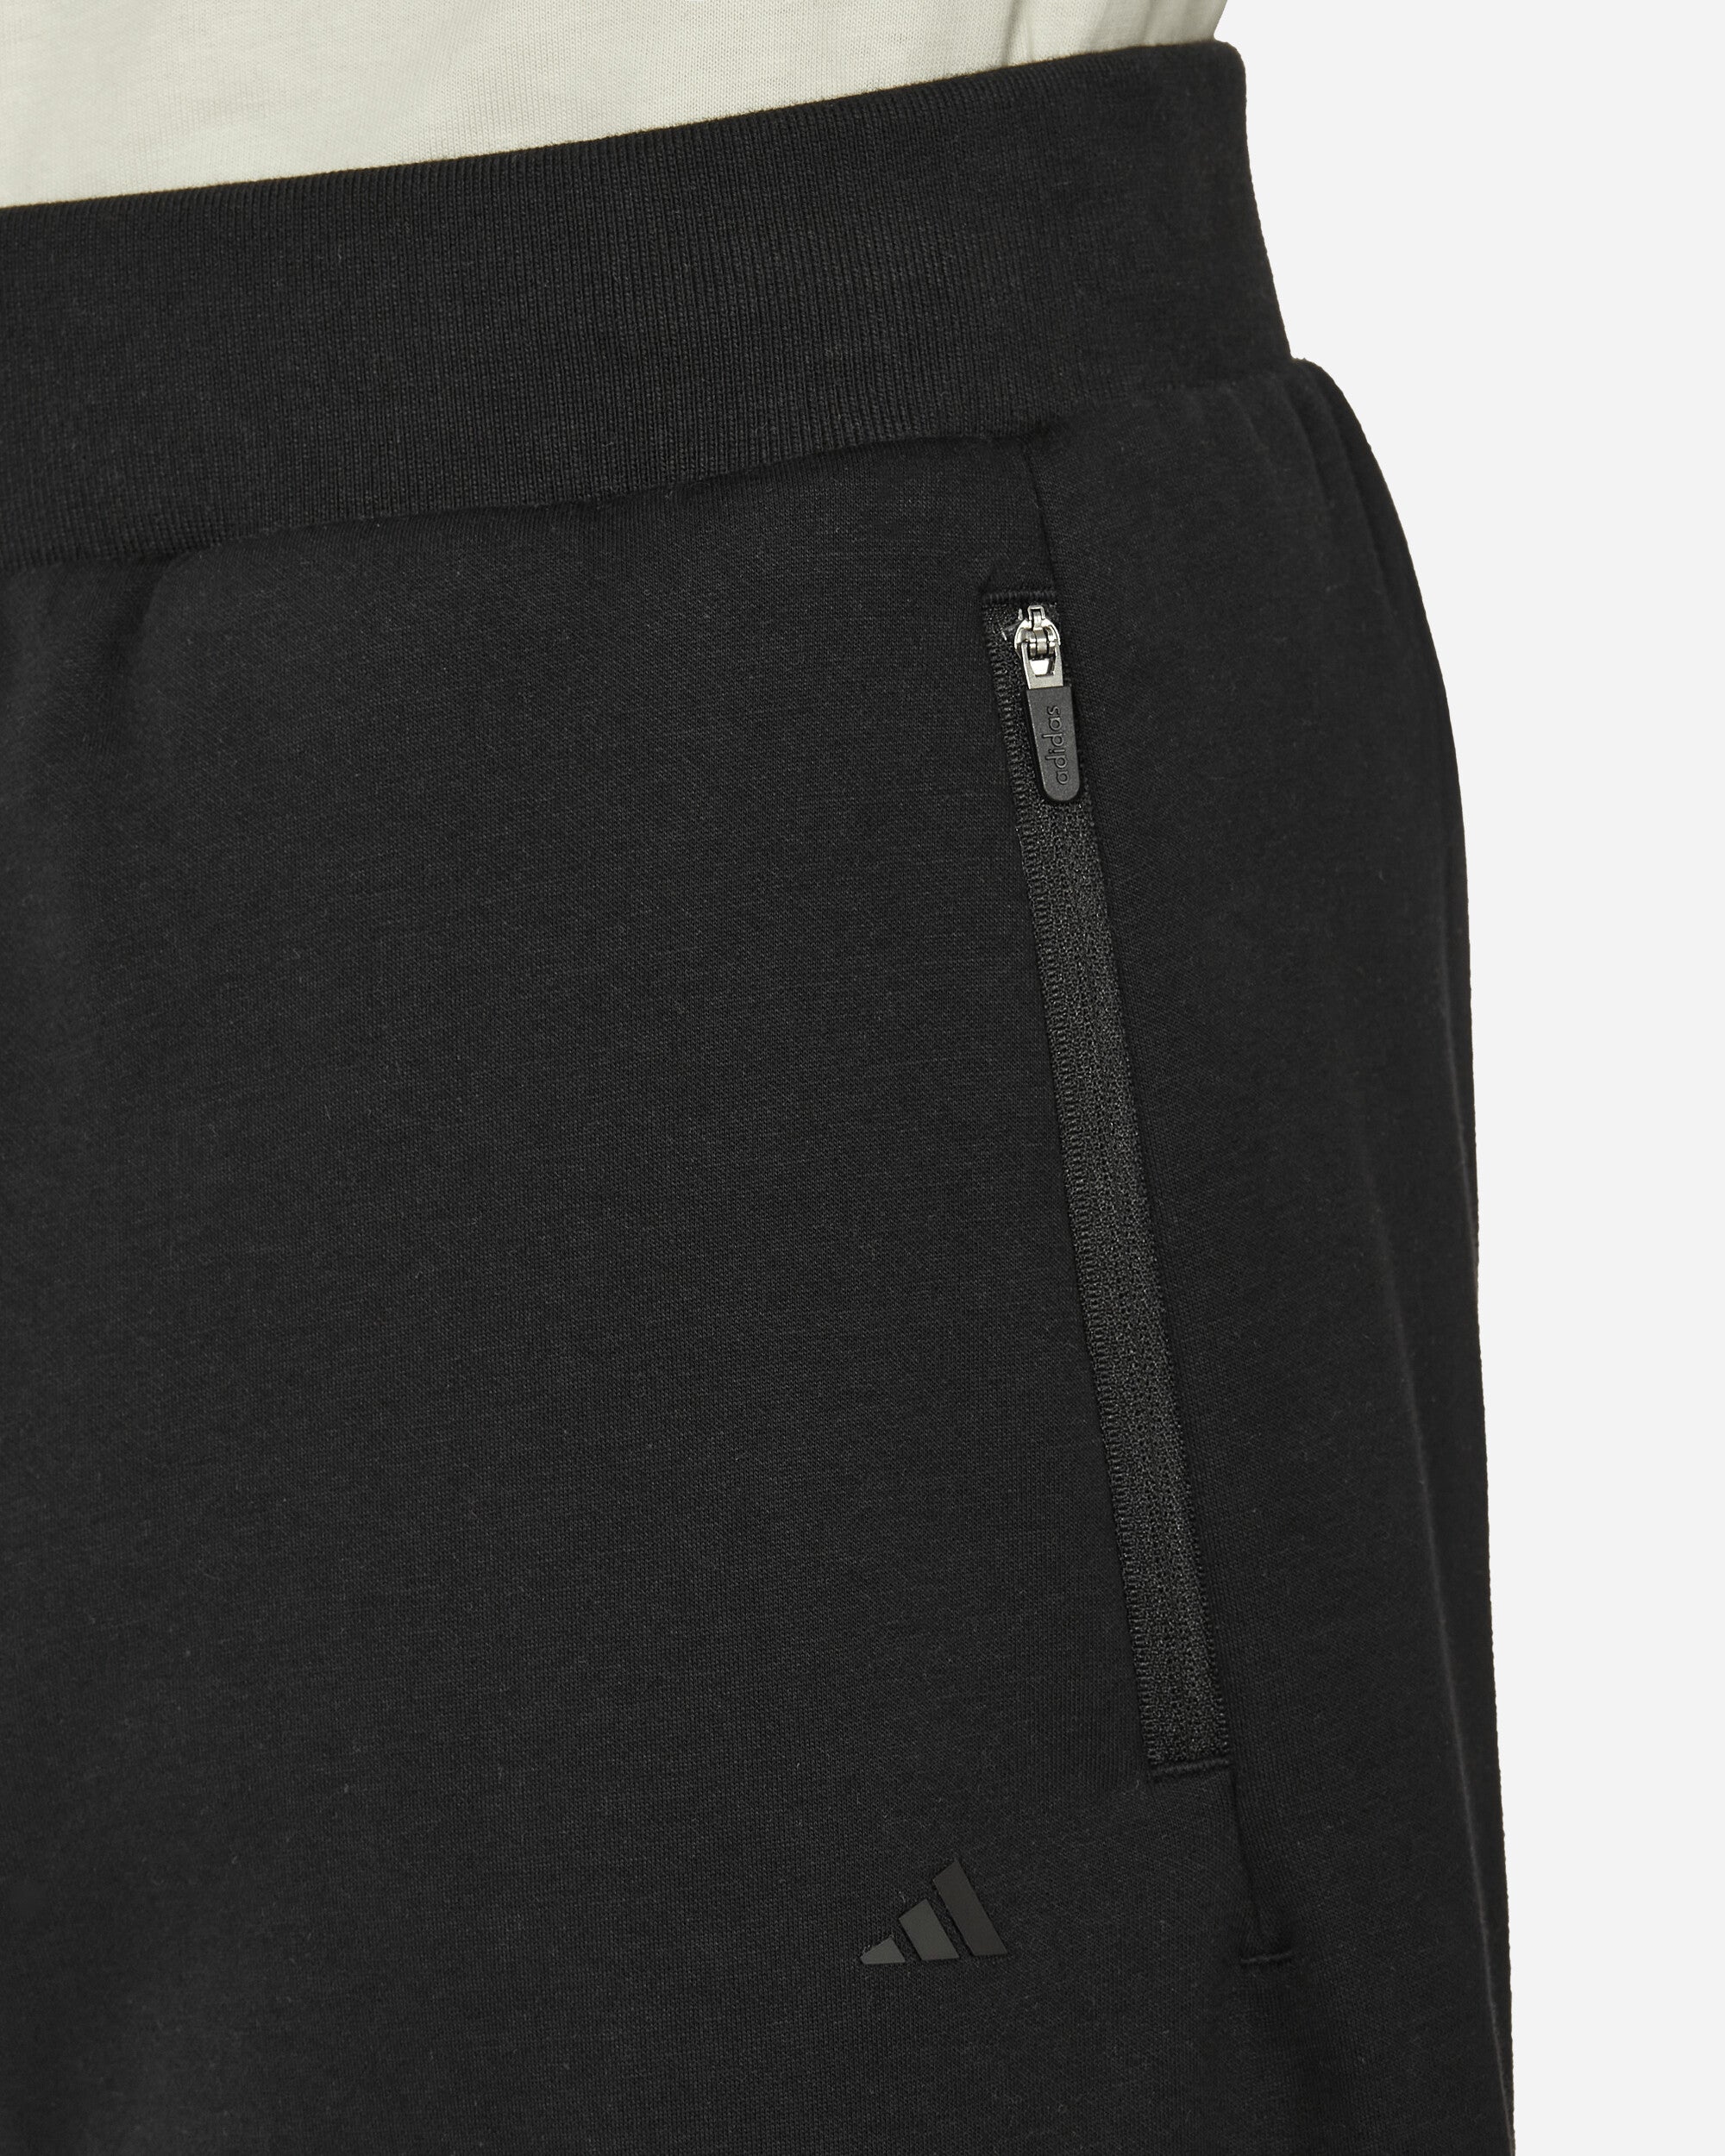 adidas One Fl Short Black Shorts Short IJ5550 001